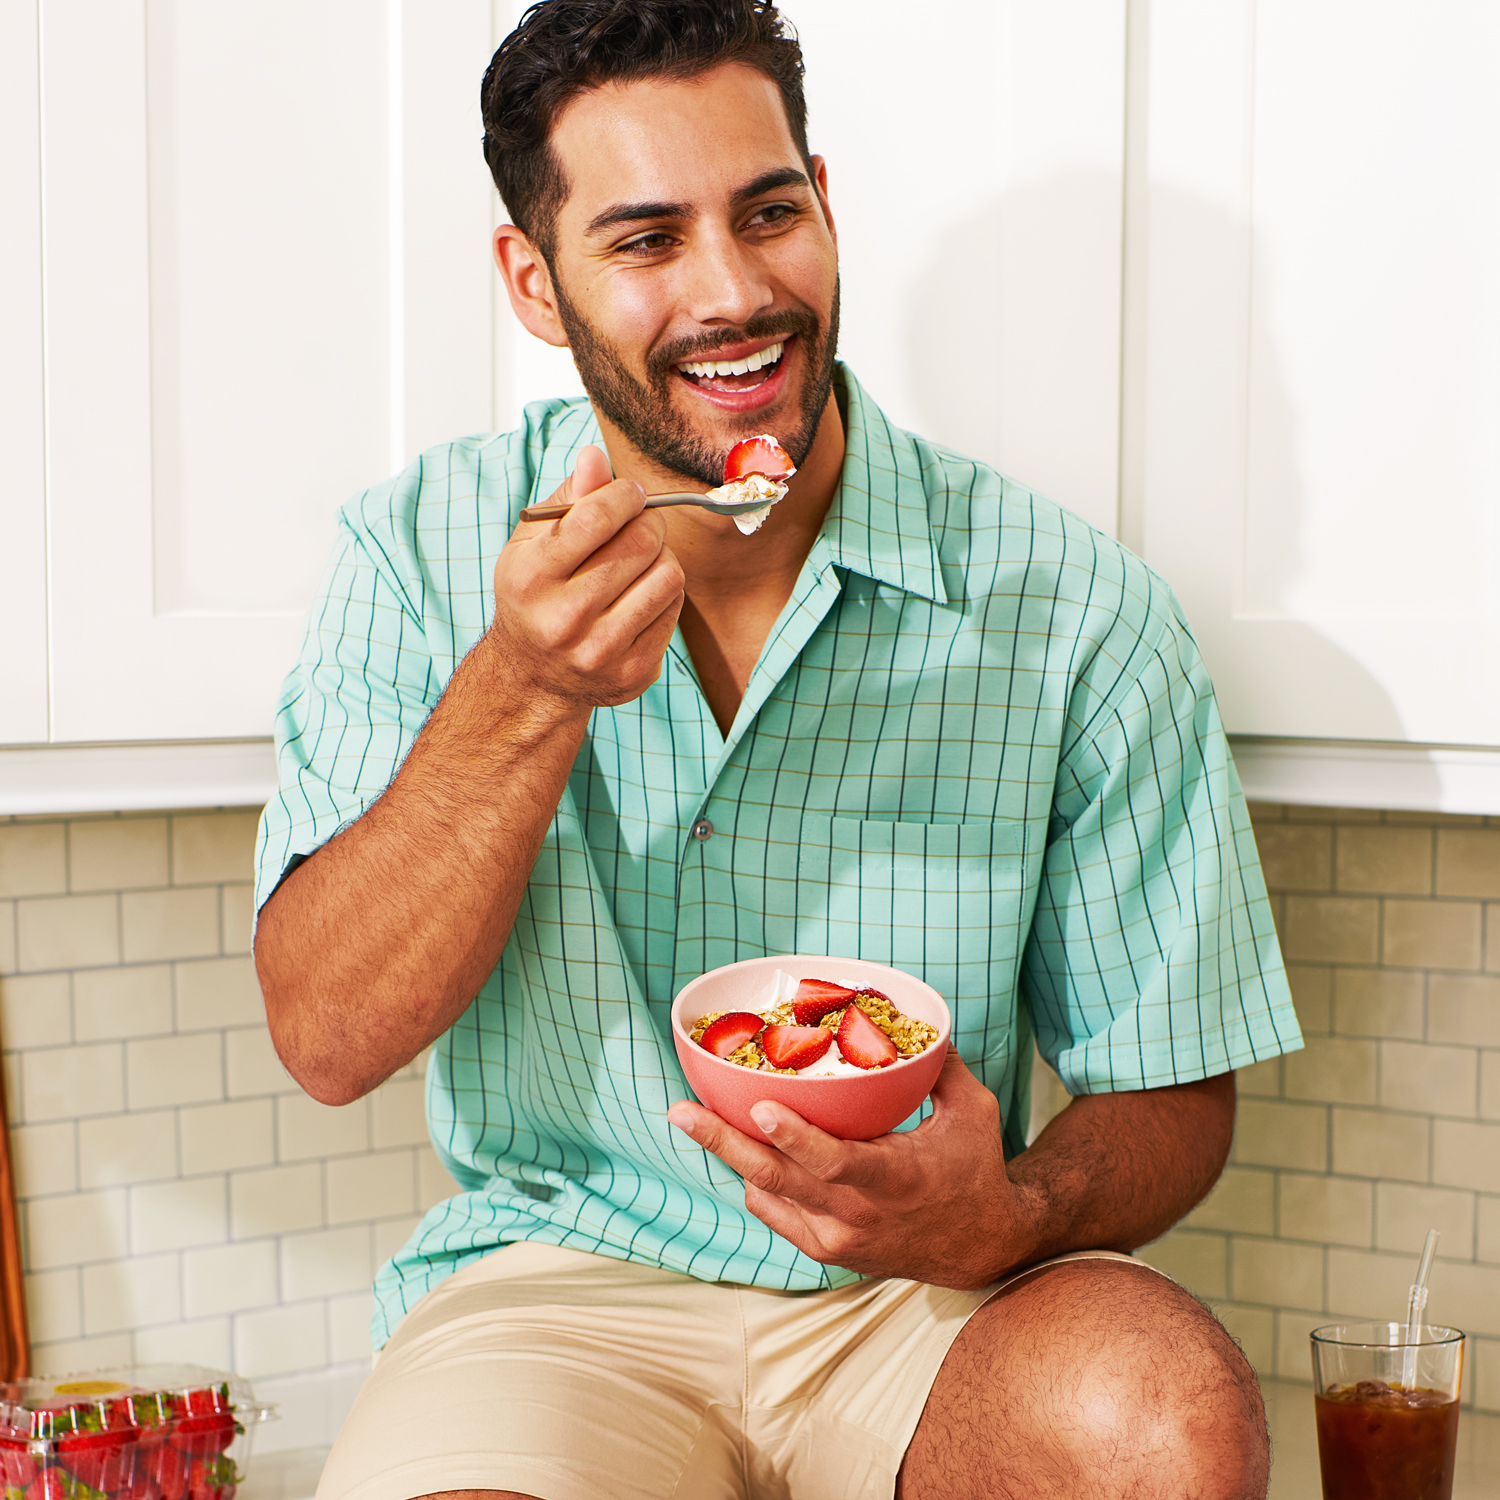 Image of man eating yogurt with fresh sliced strawberries and granola